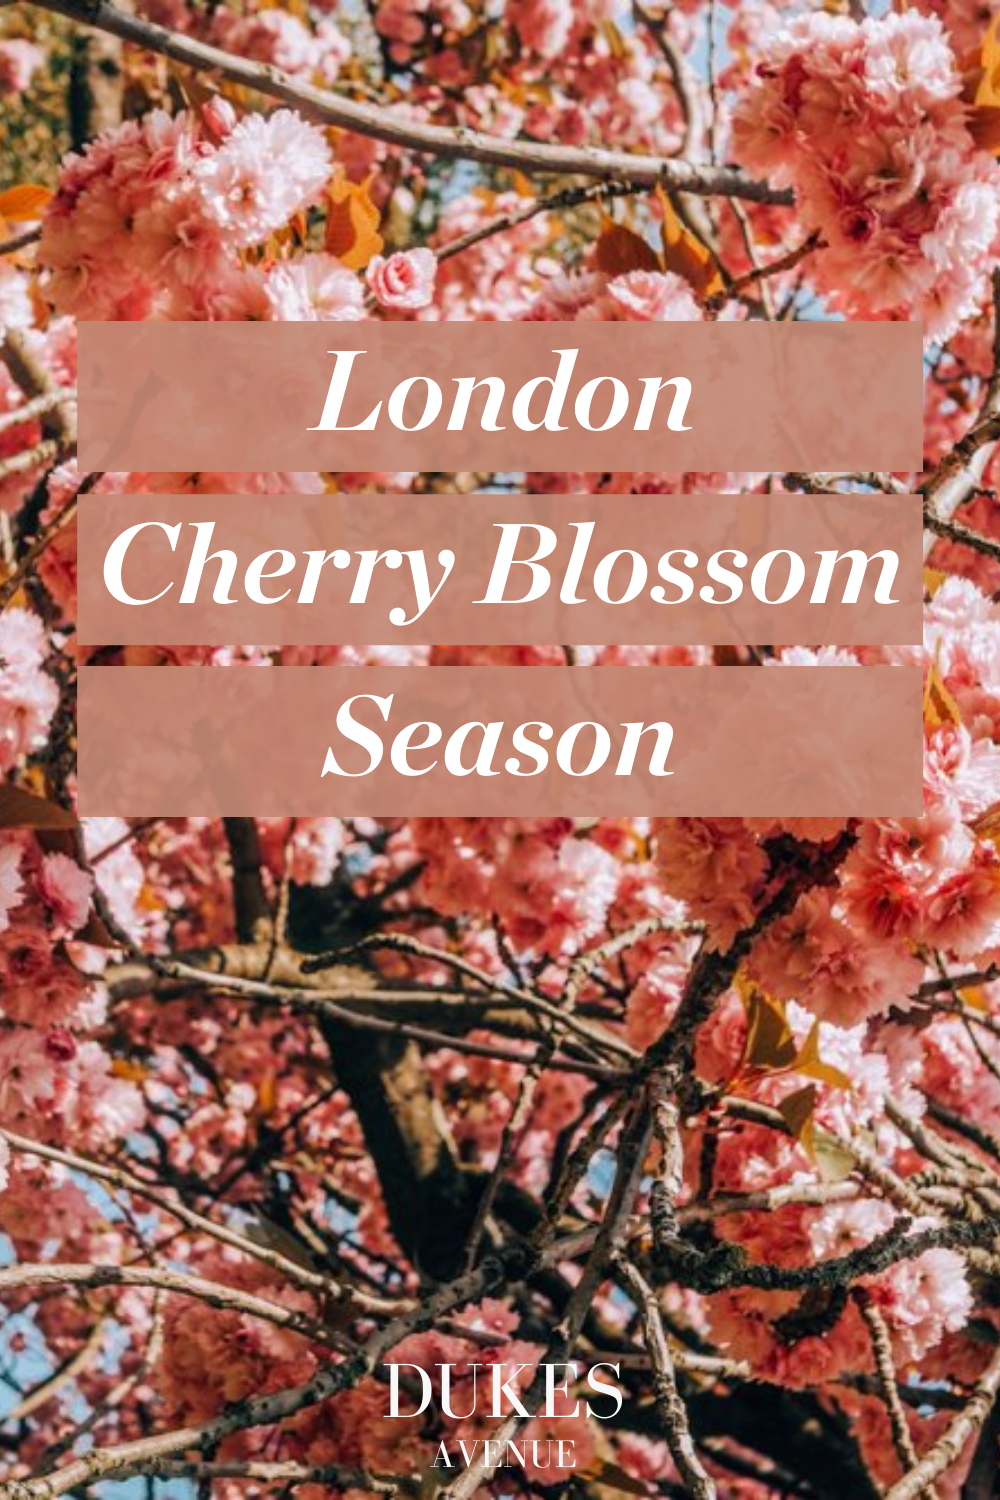 A cherry blossom tree with text overlay "London Cherry Blossom Season"